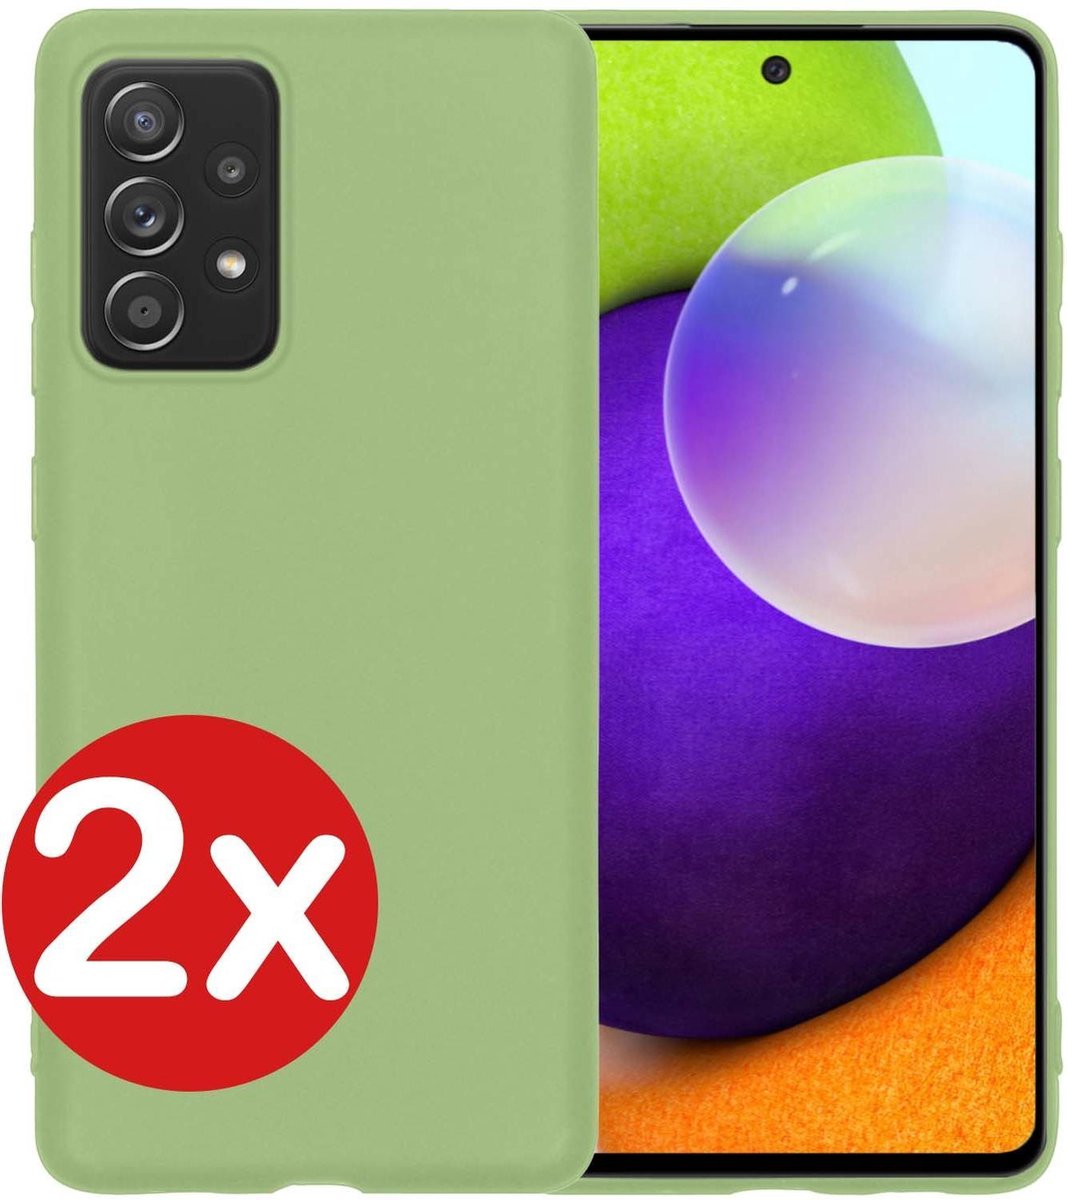 Samsung Galaxy A52 Hoesje Siliconen Case Cover - Samsung A52 Hoesje Cover Hoes Siliconen - Groen - 2 PACK